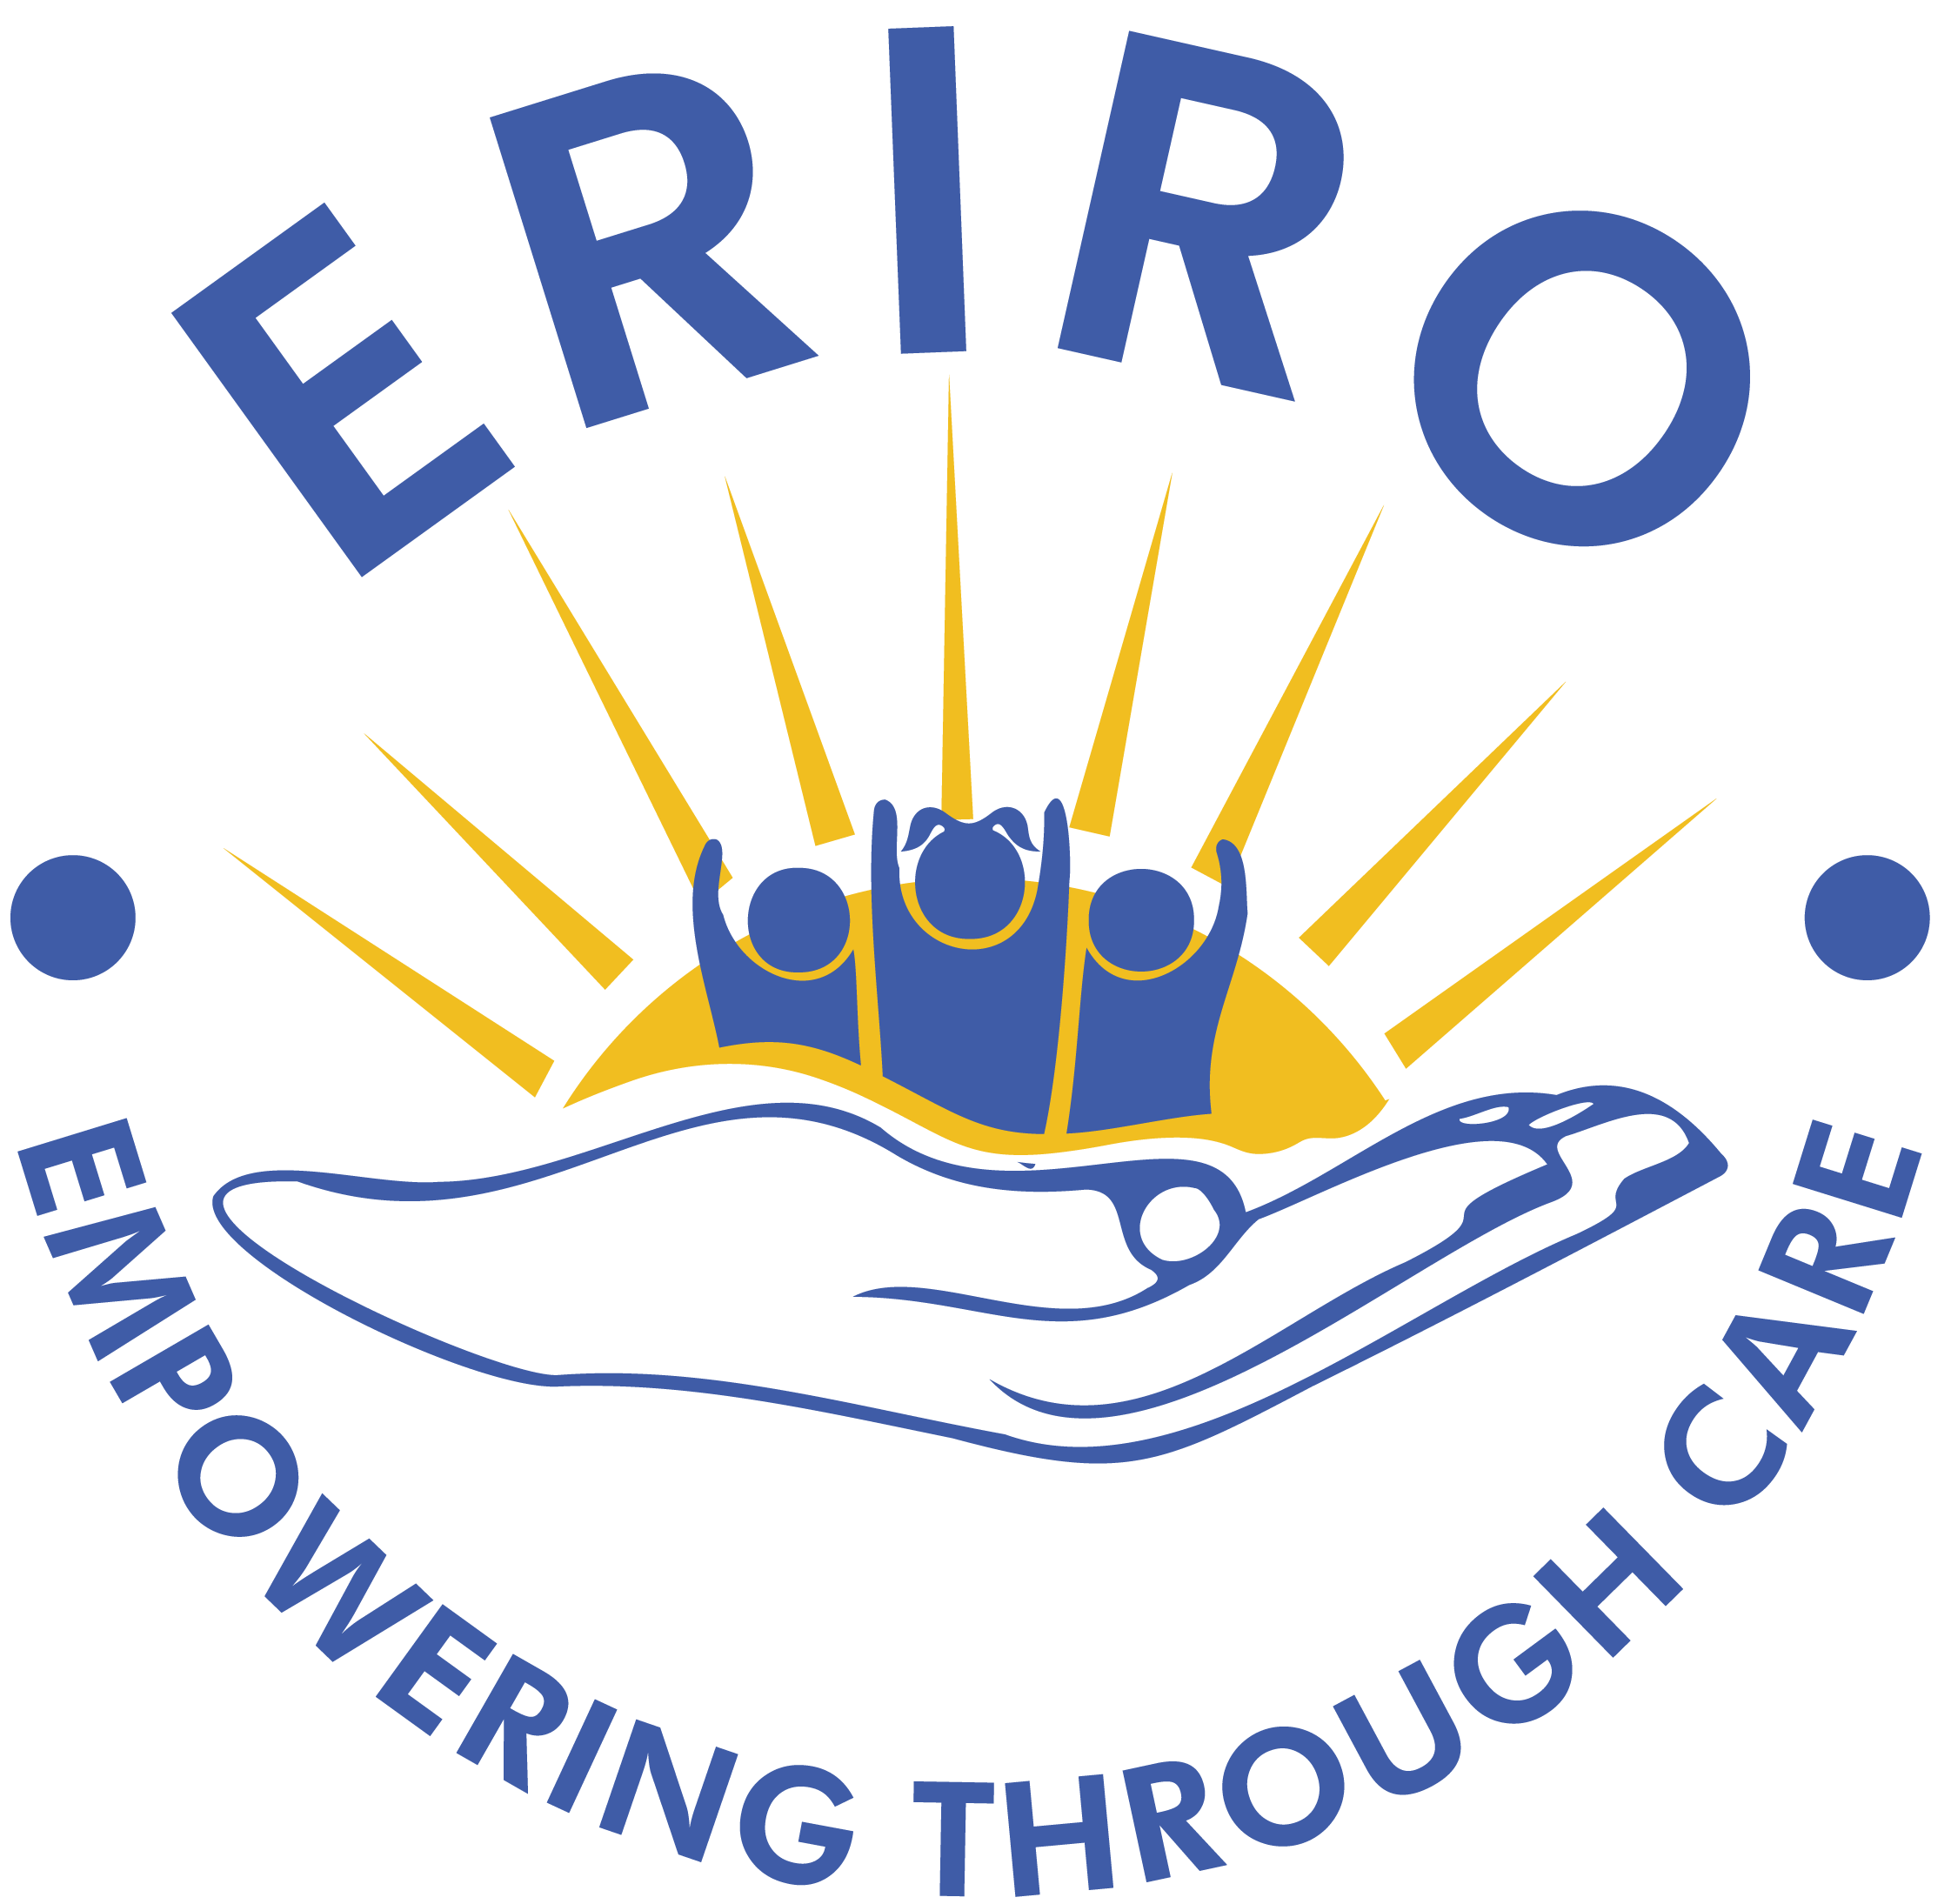 Ettendo Rural Initiatives & Response Outreaches